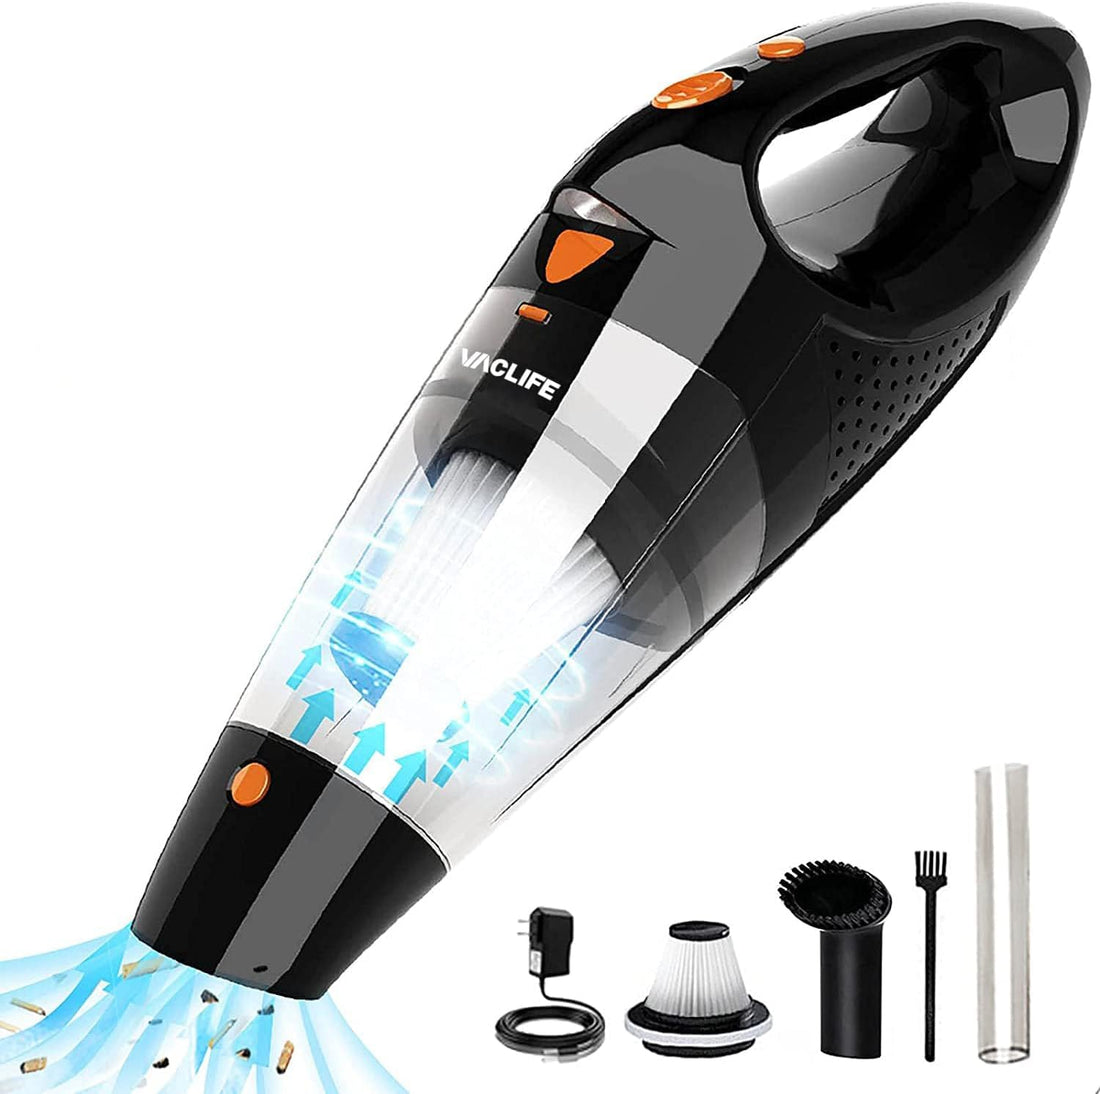 VacLife Handheld Vacuum, Car Vacuum Cleaner Cordless, Mini Portable Rechargeable Vacuum Cleaner with 2 Filters, Orange (VL188)